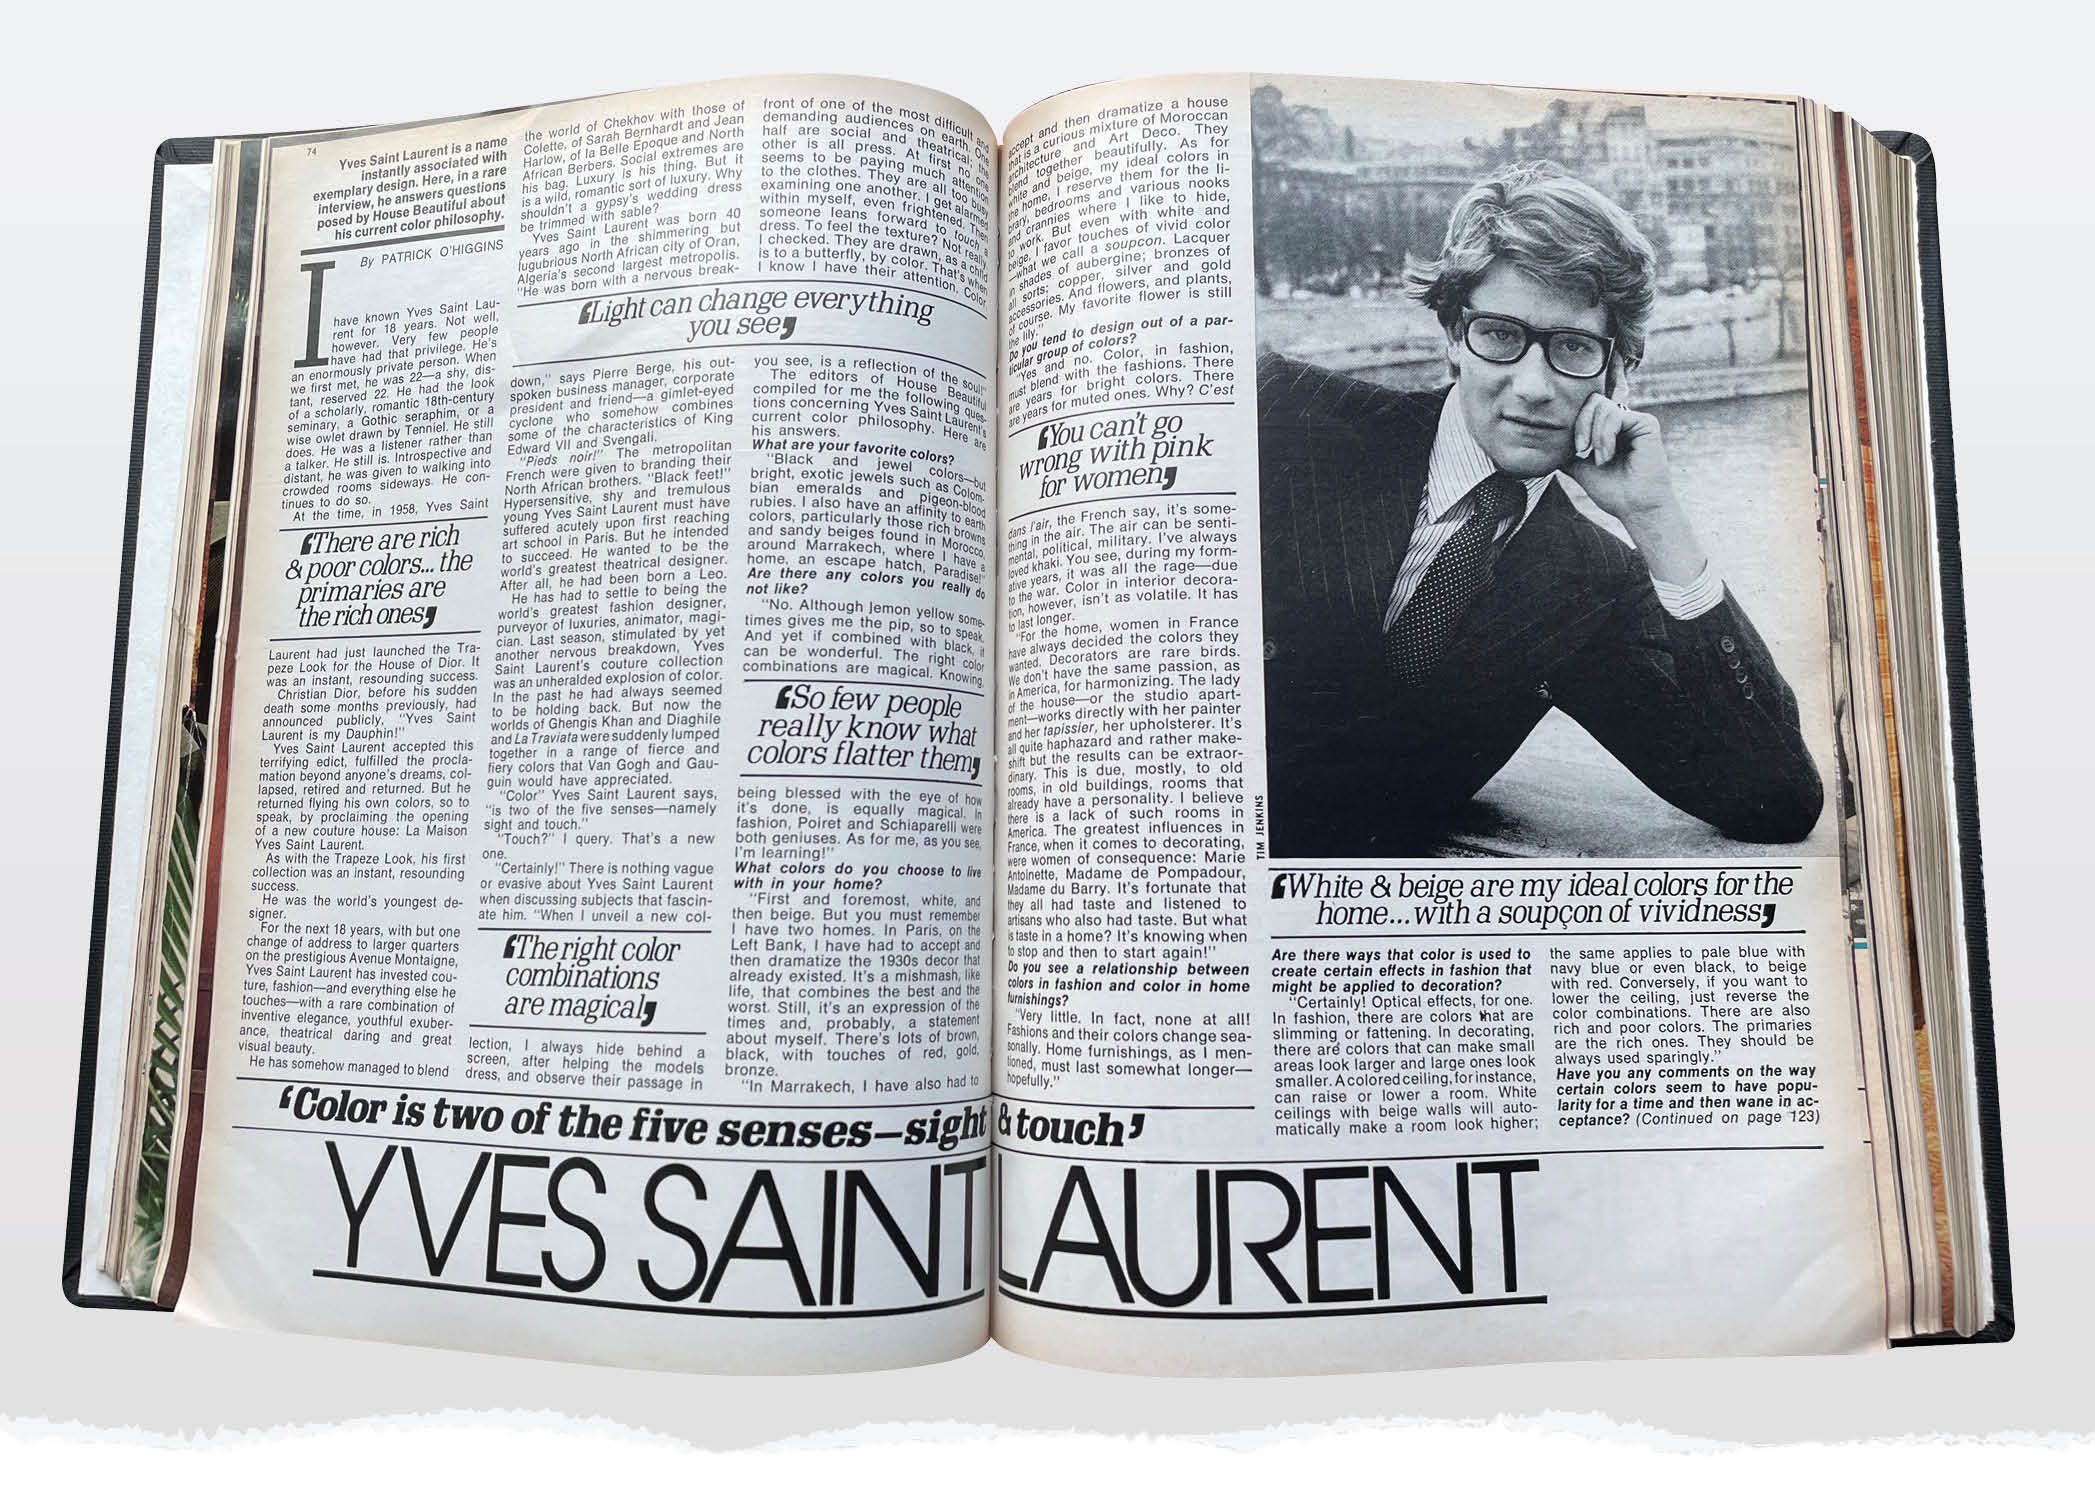 Yves Saint Laurent: He Changed Women